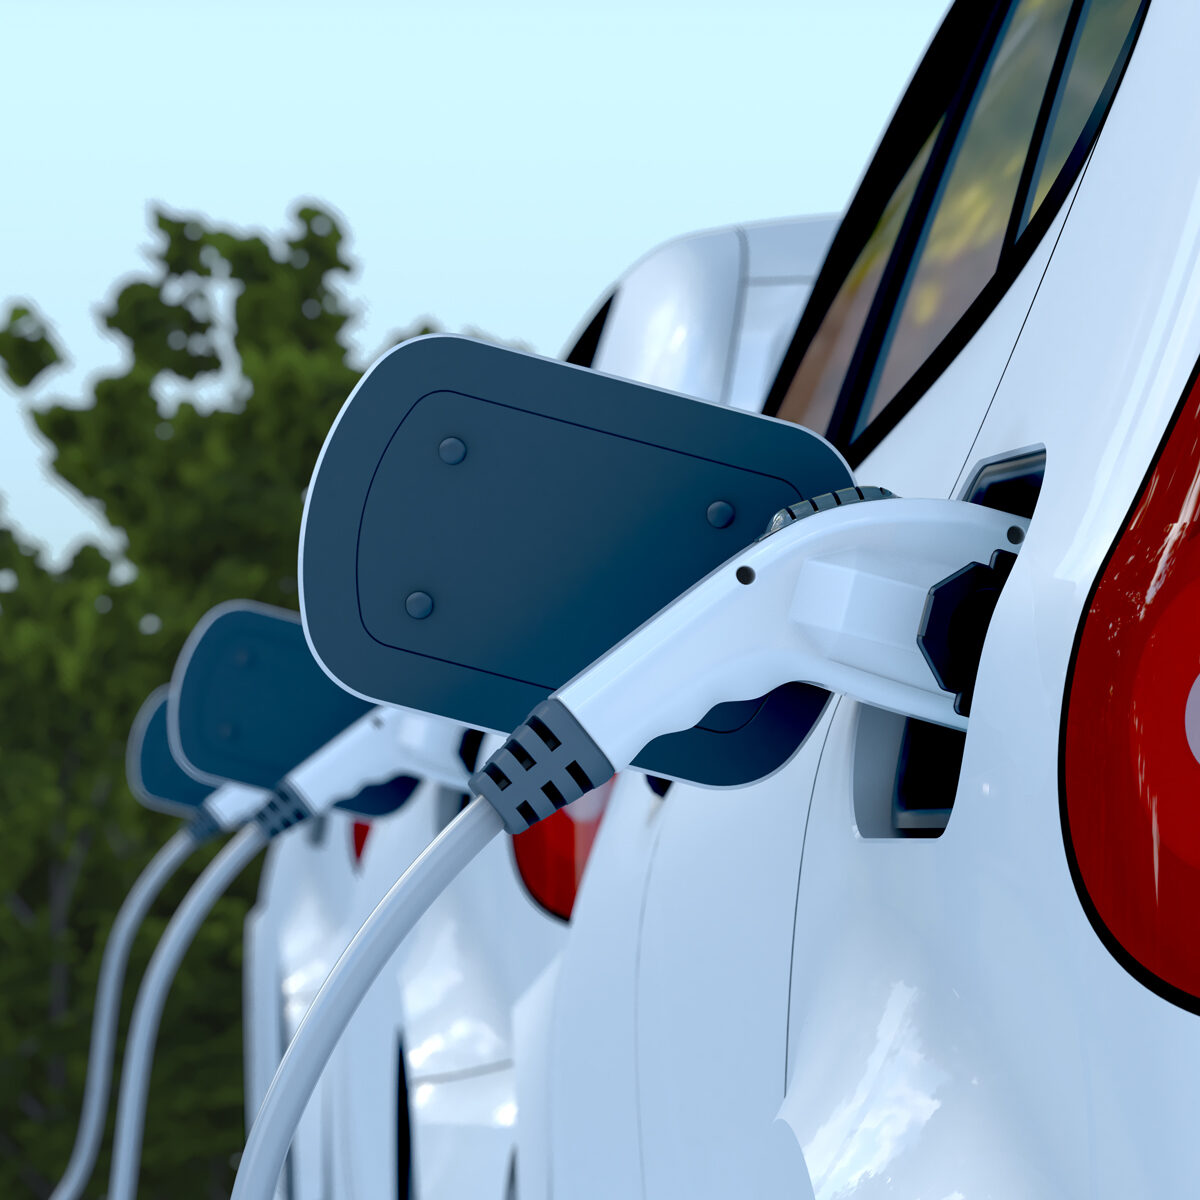 Business Electric Vehicle Charging Rebates